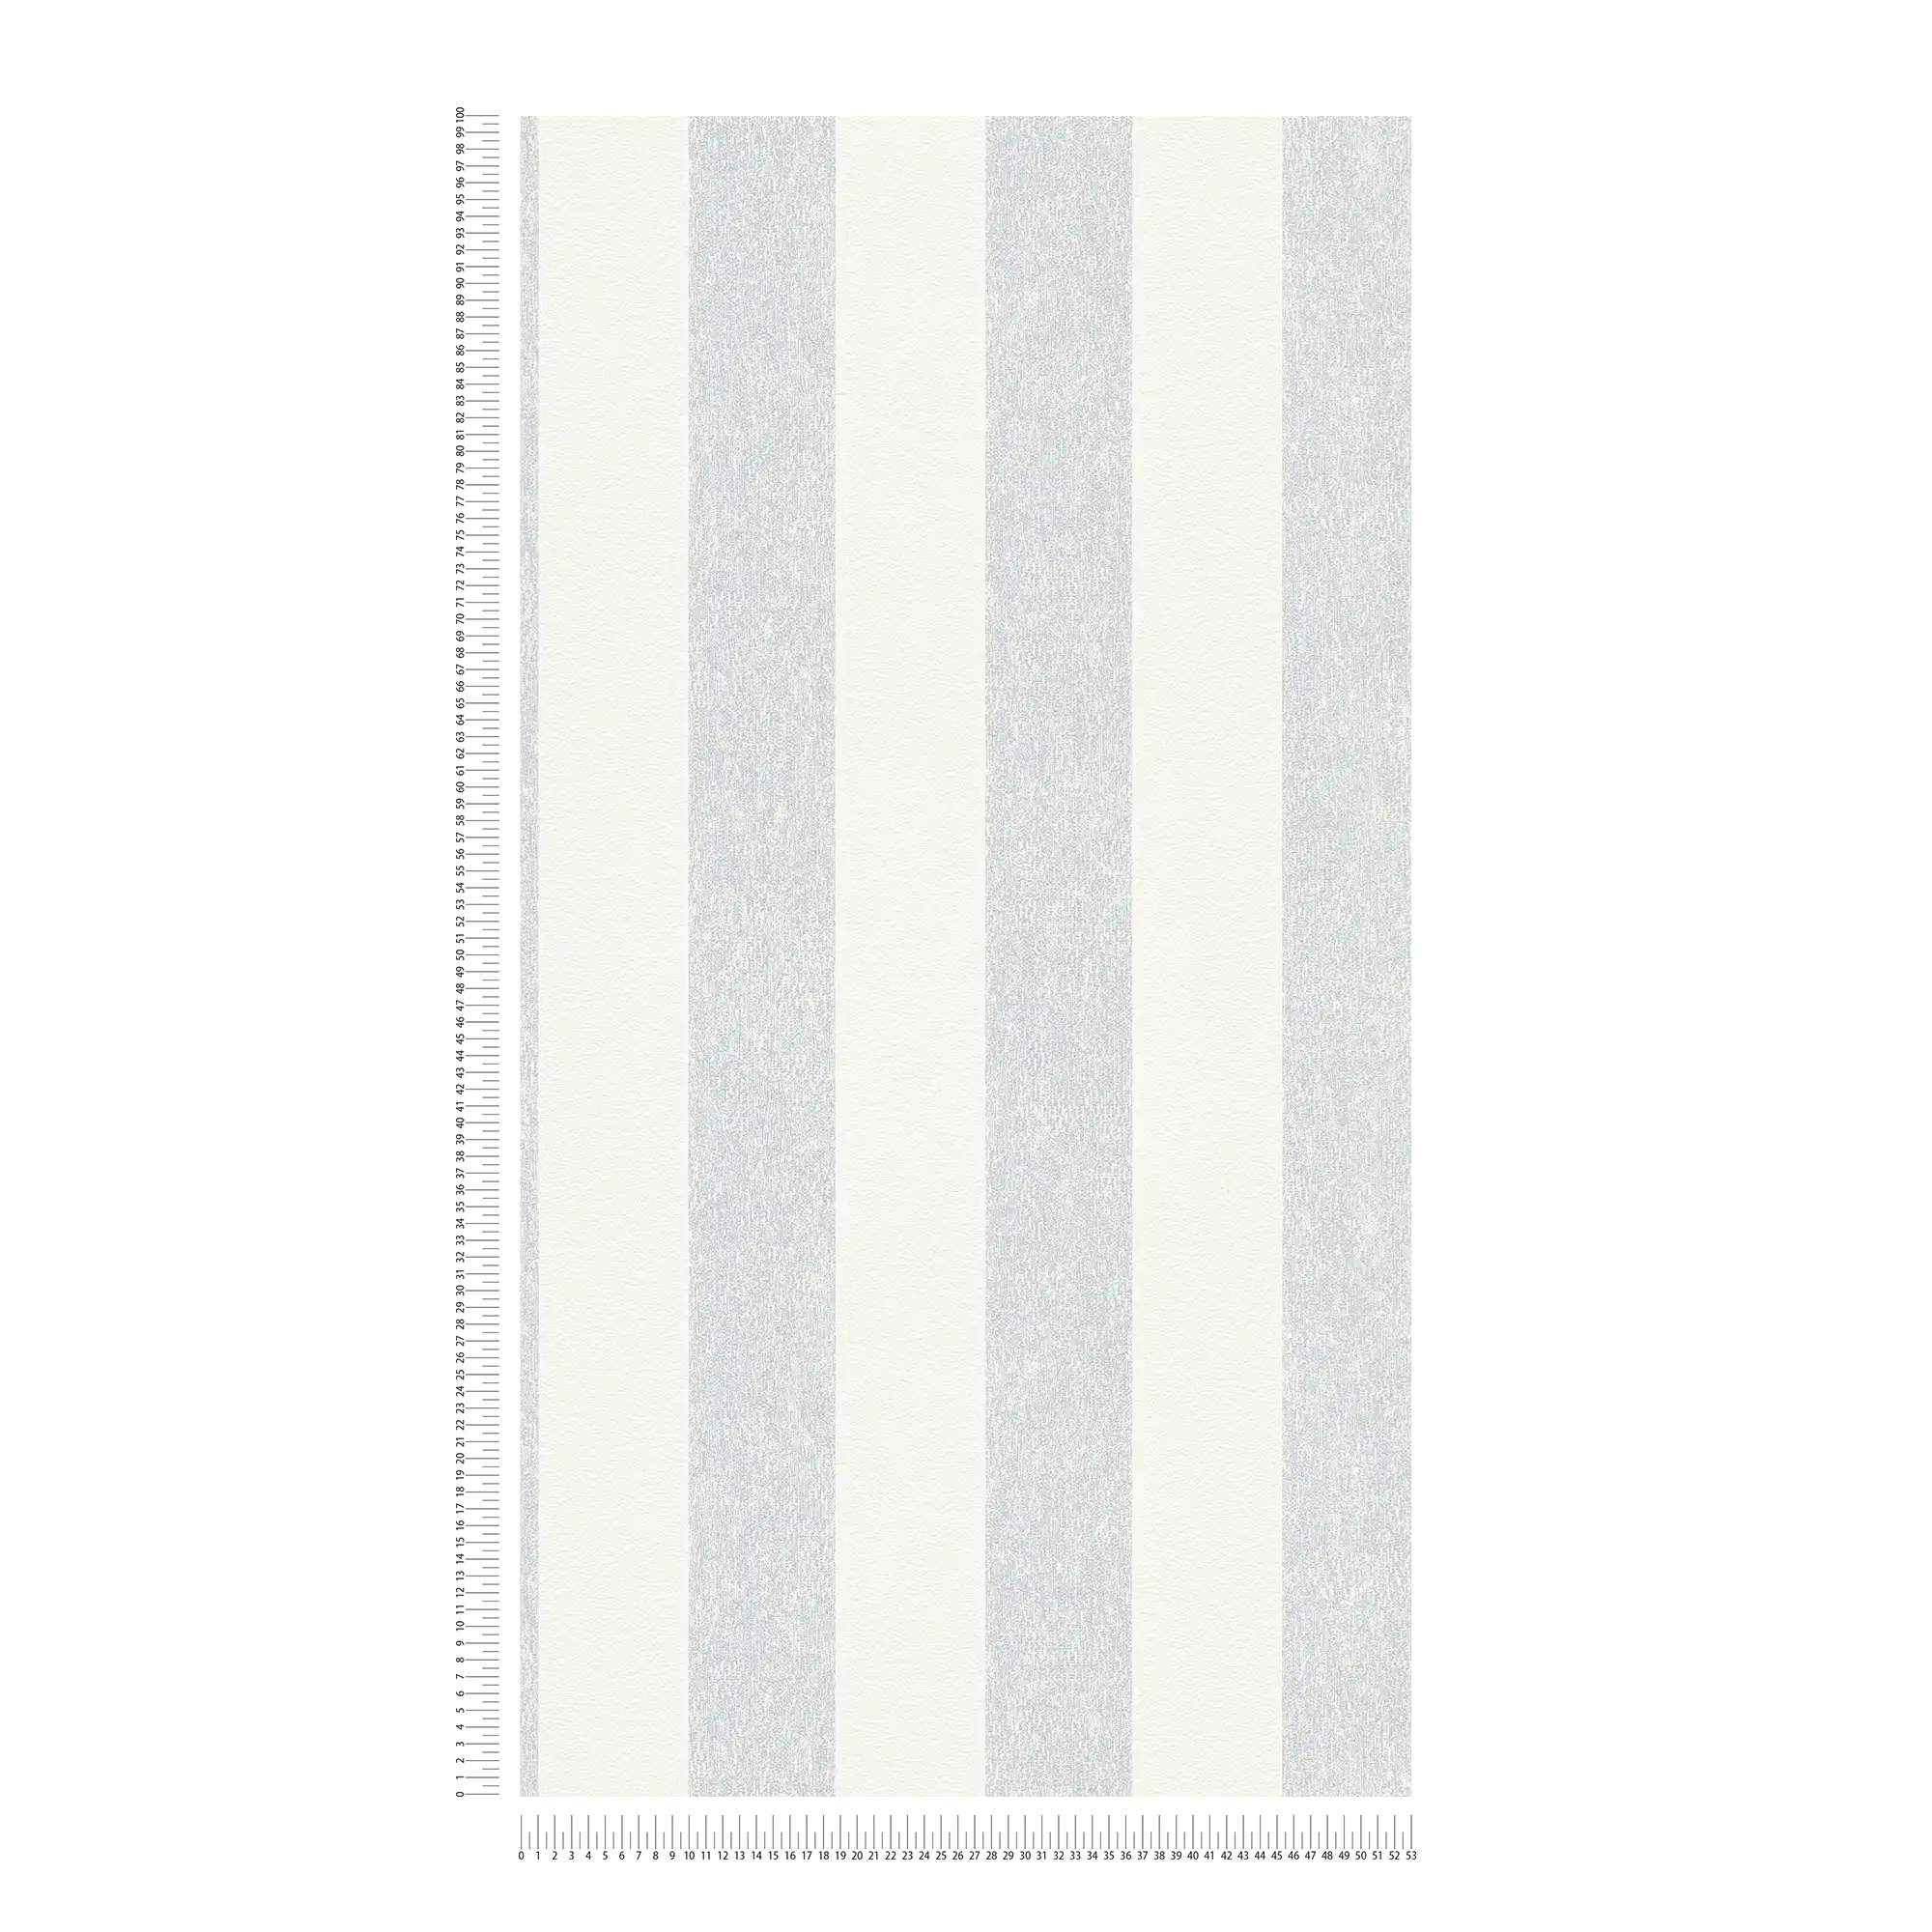             Striped wallpaper with structure optics matt - grey, white
        